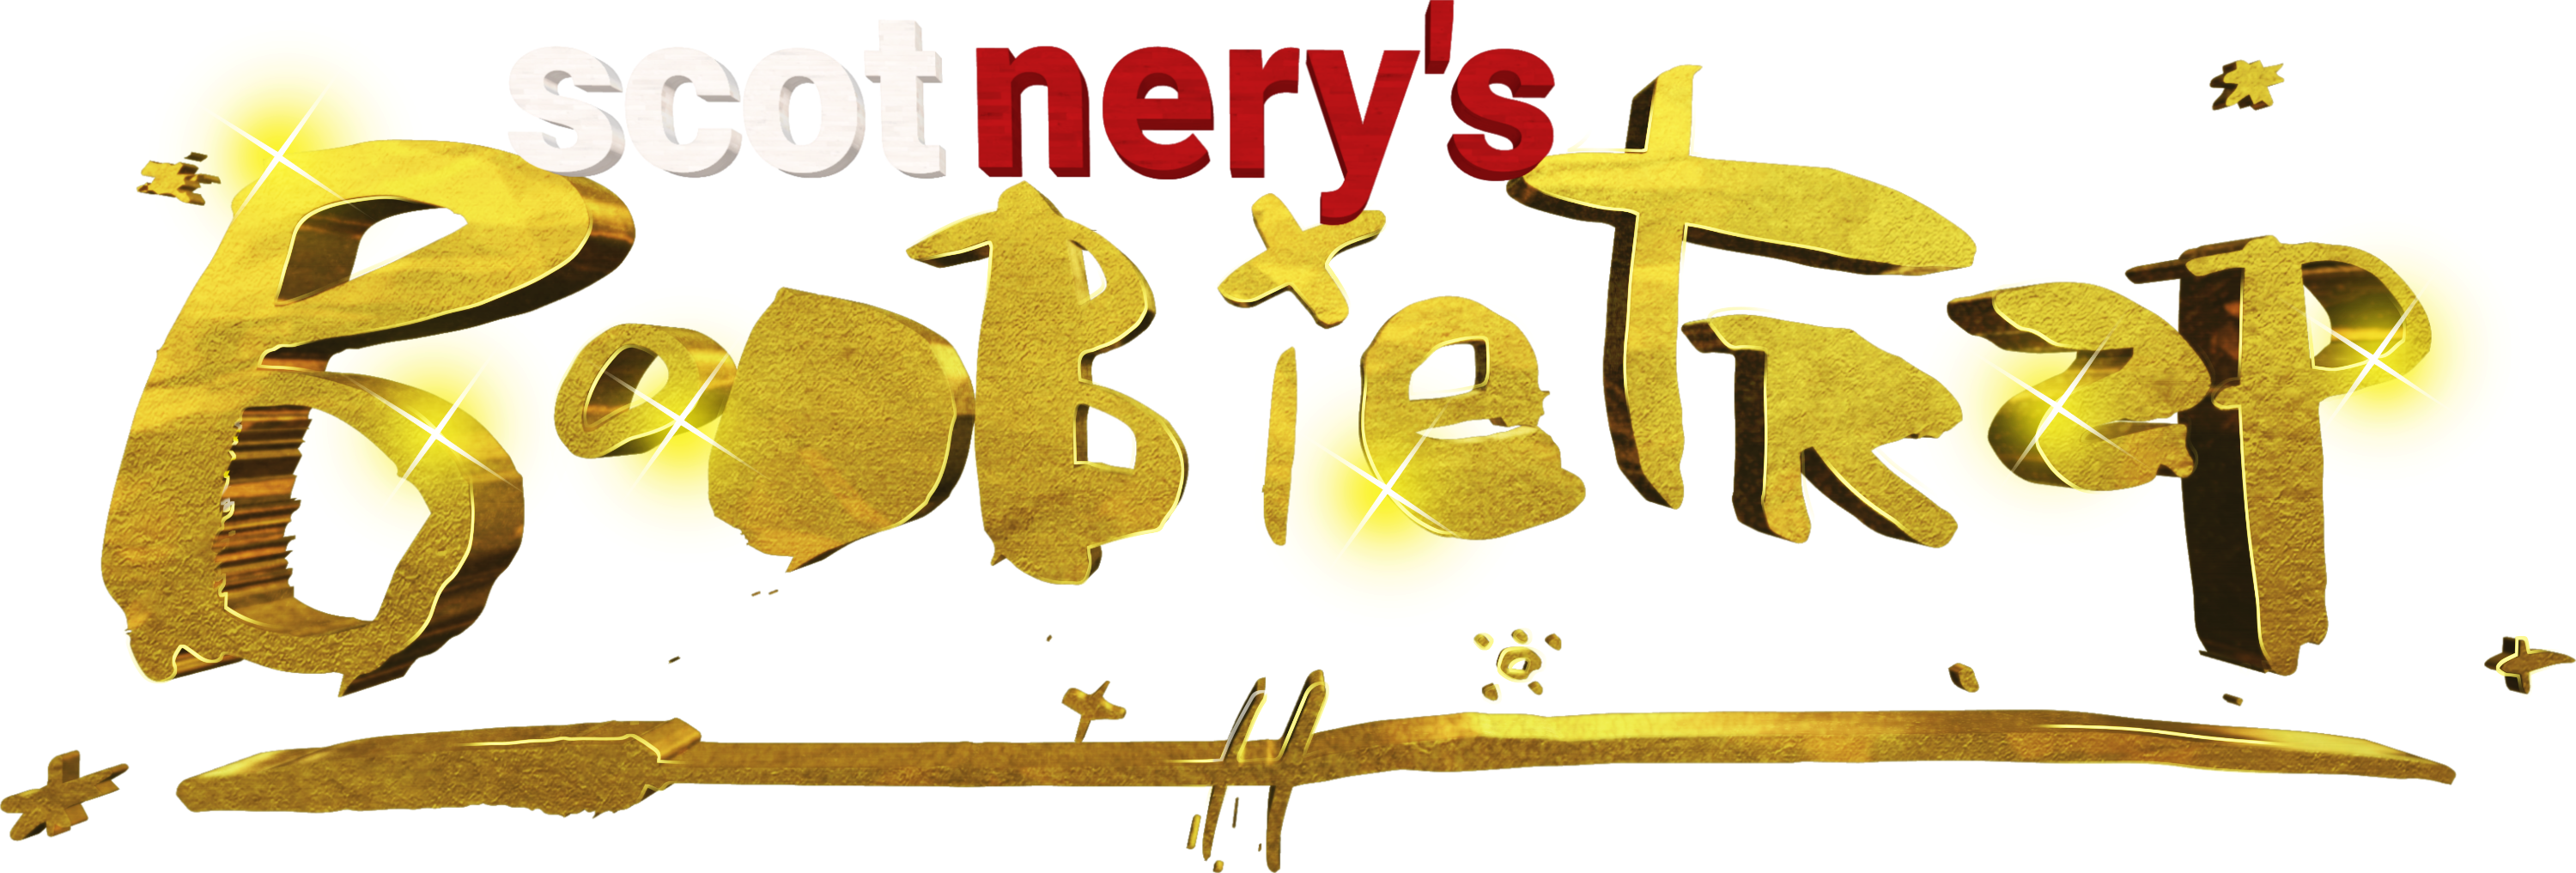 Scot Nery's Boobie Trap Logo